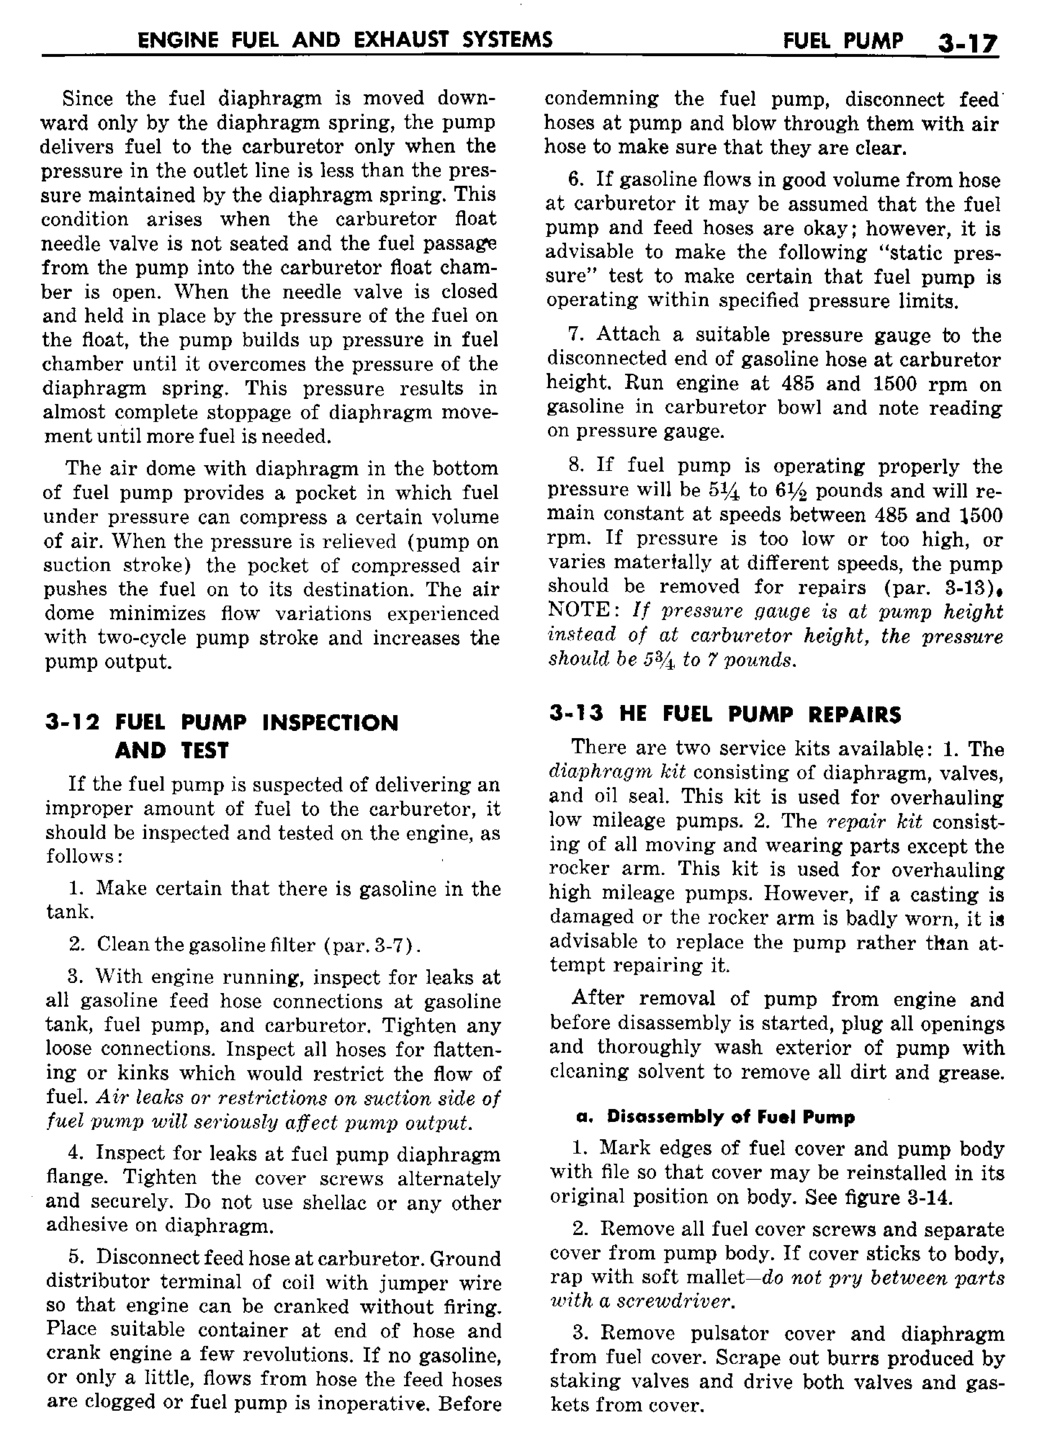 n_04 1960 Buick Shop Manual - Engine Fuel & Exhaust-017-017.jpg